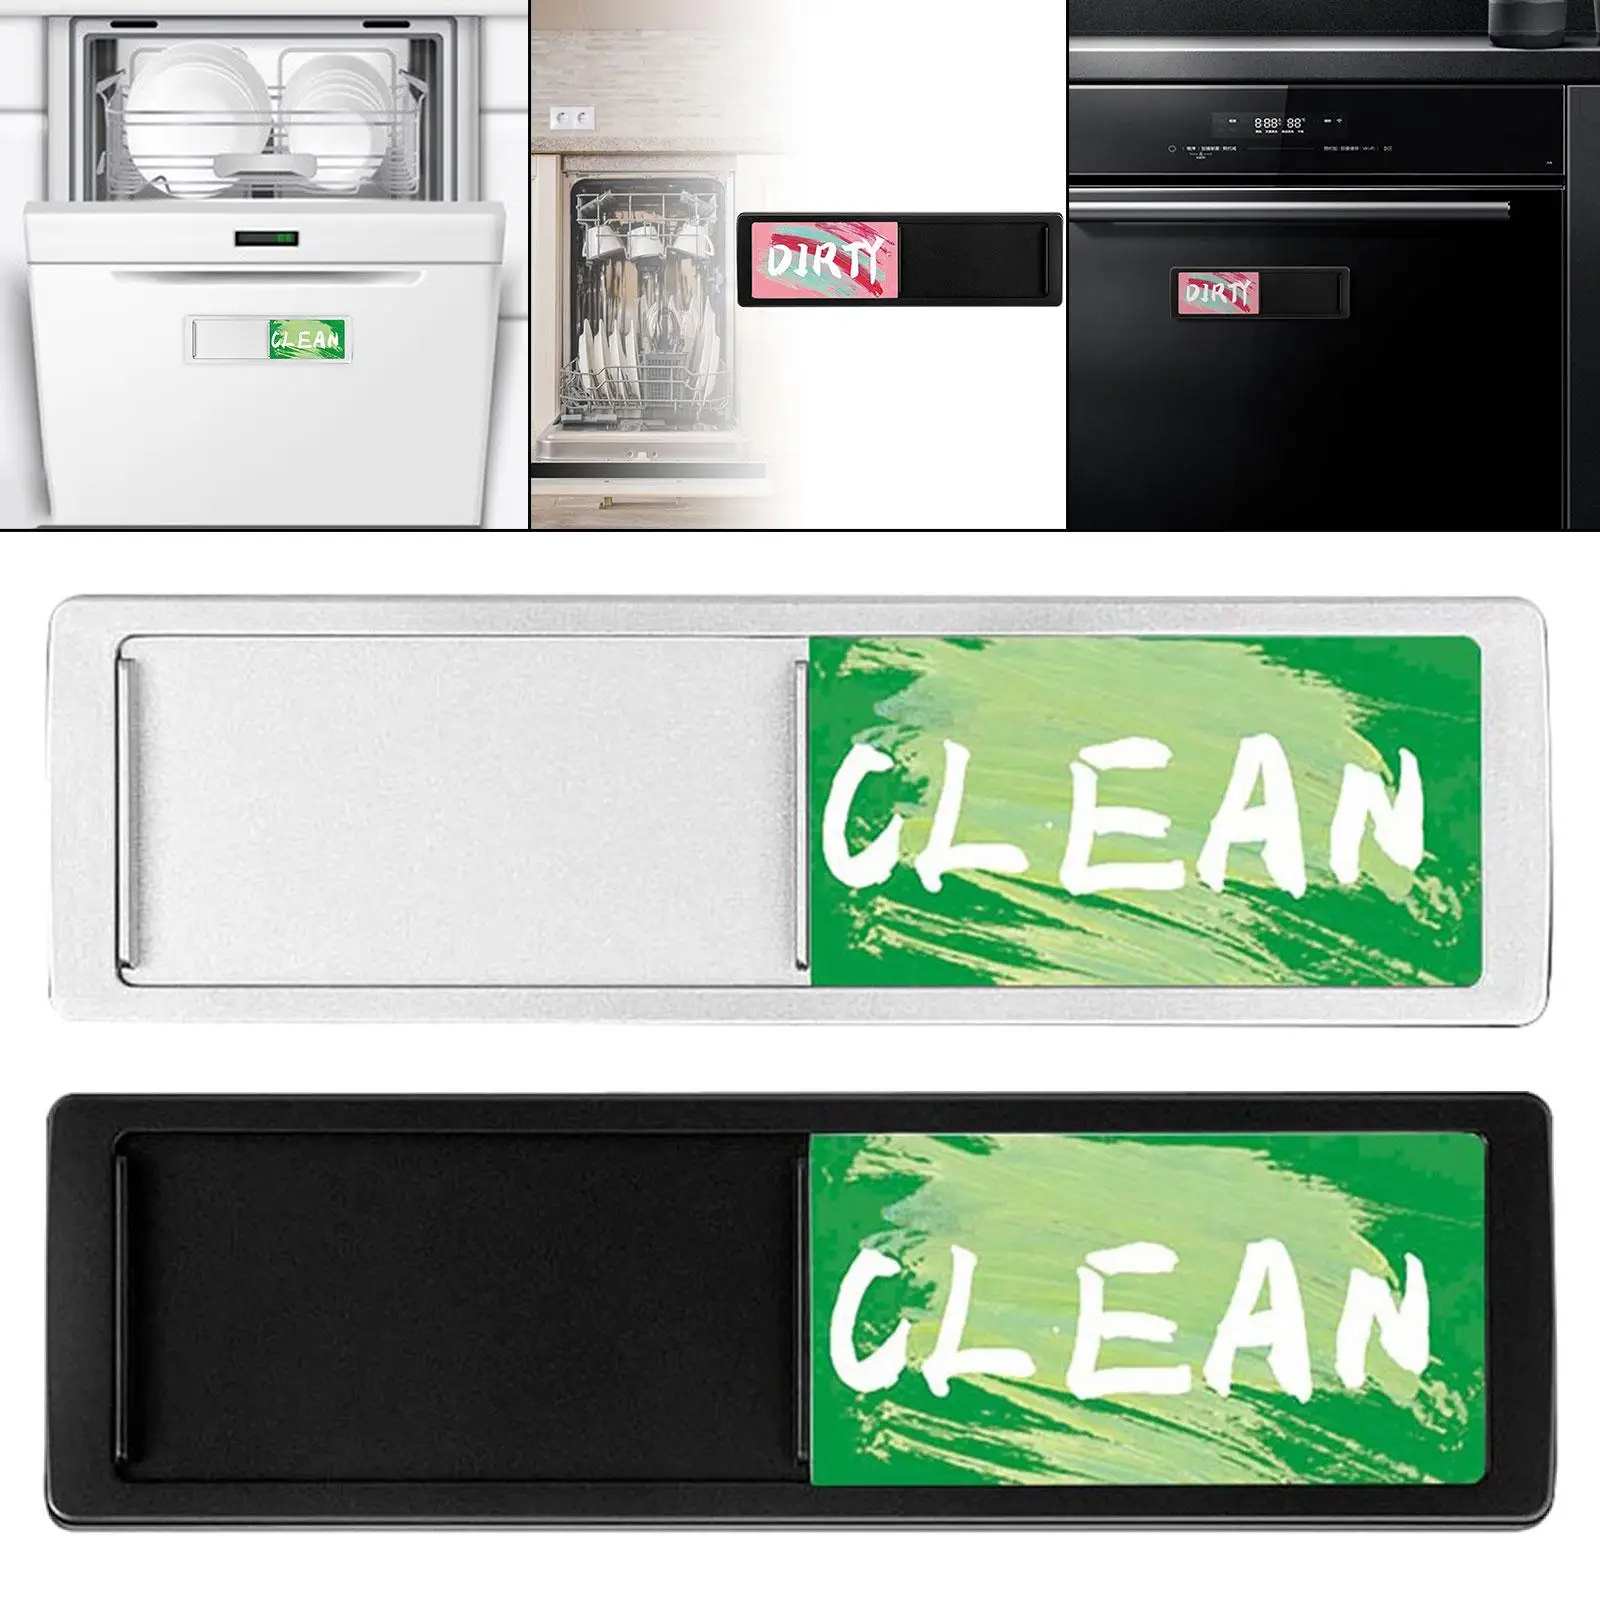 Dishwasher Clean Dirty Sign Stylish for Washing Machine Apartment Dishwasher